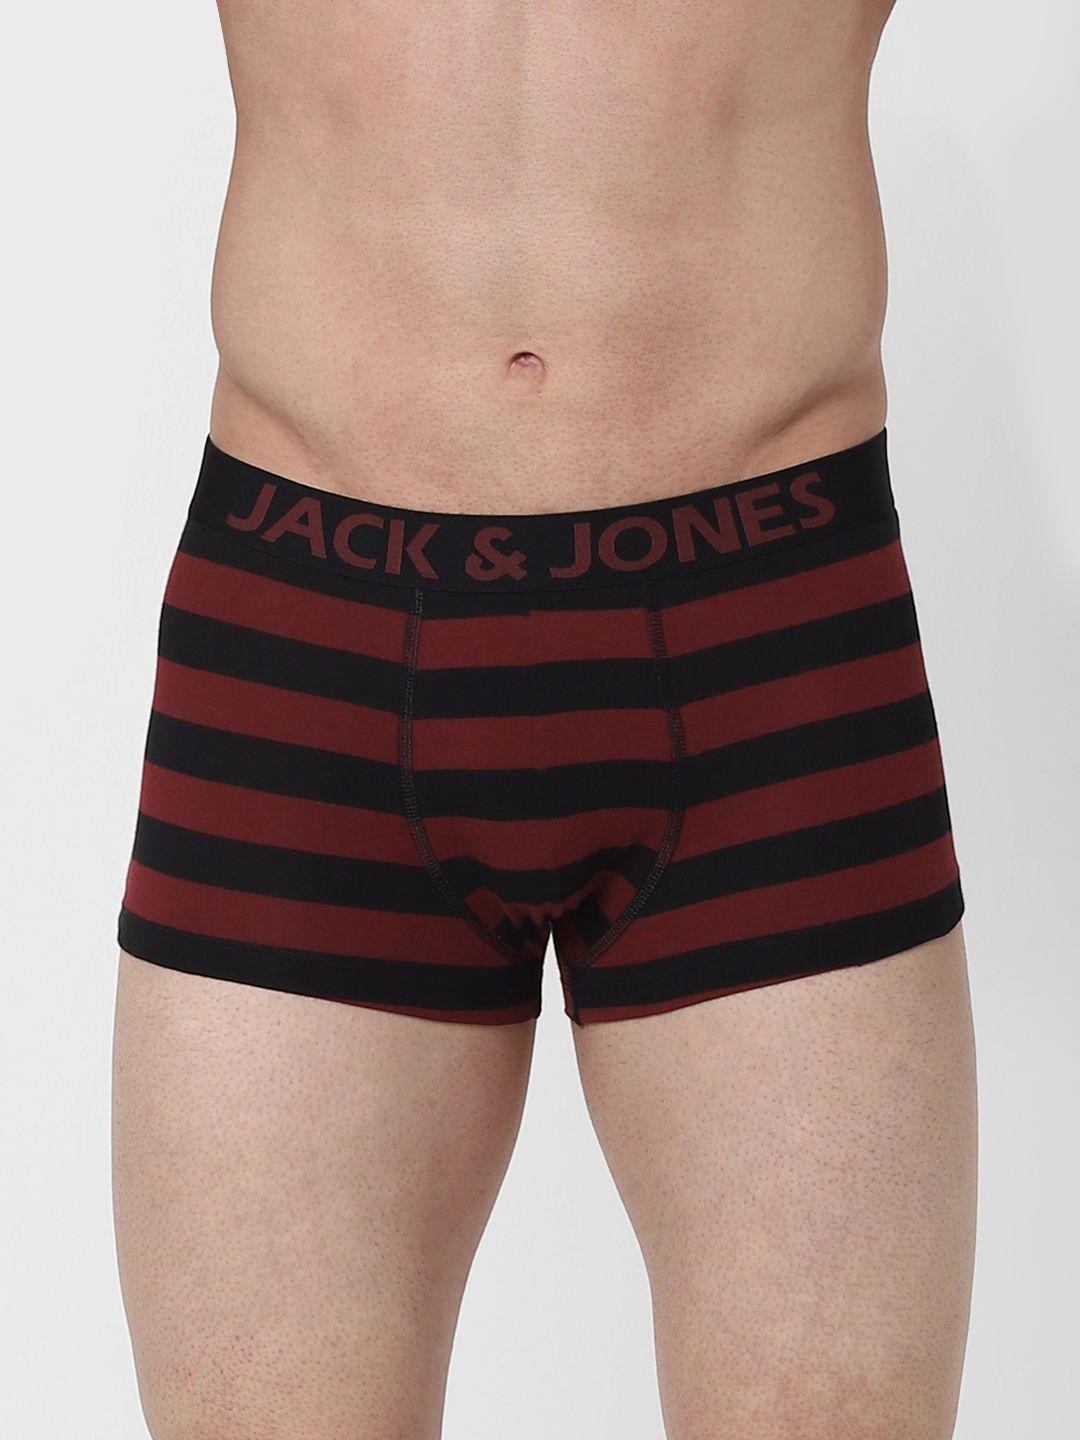 jack & jones men rust brown & black striped trunks 2288204001